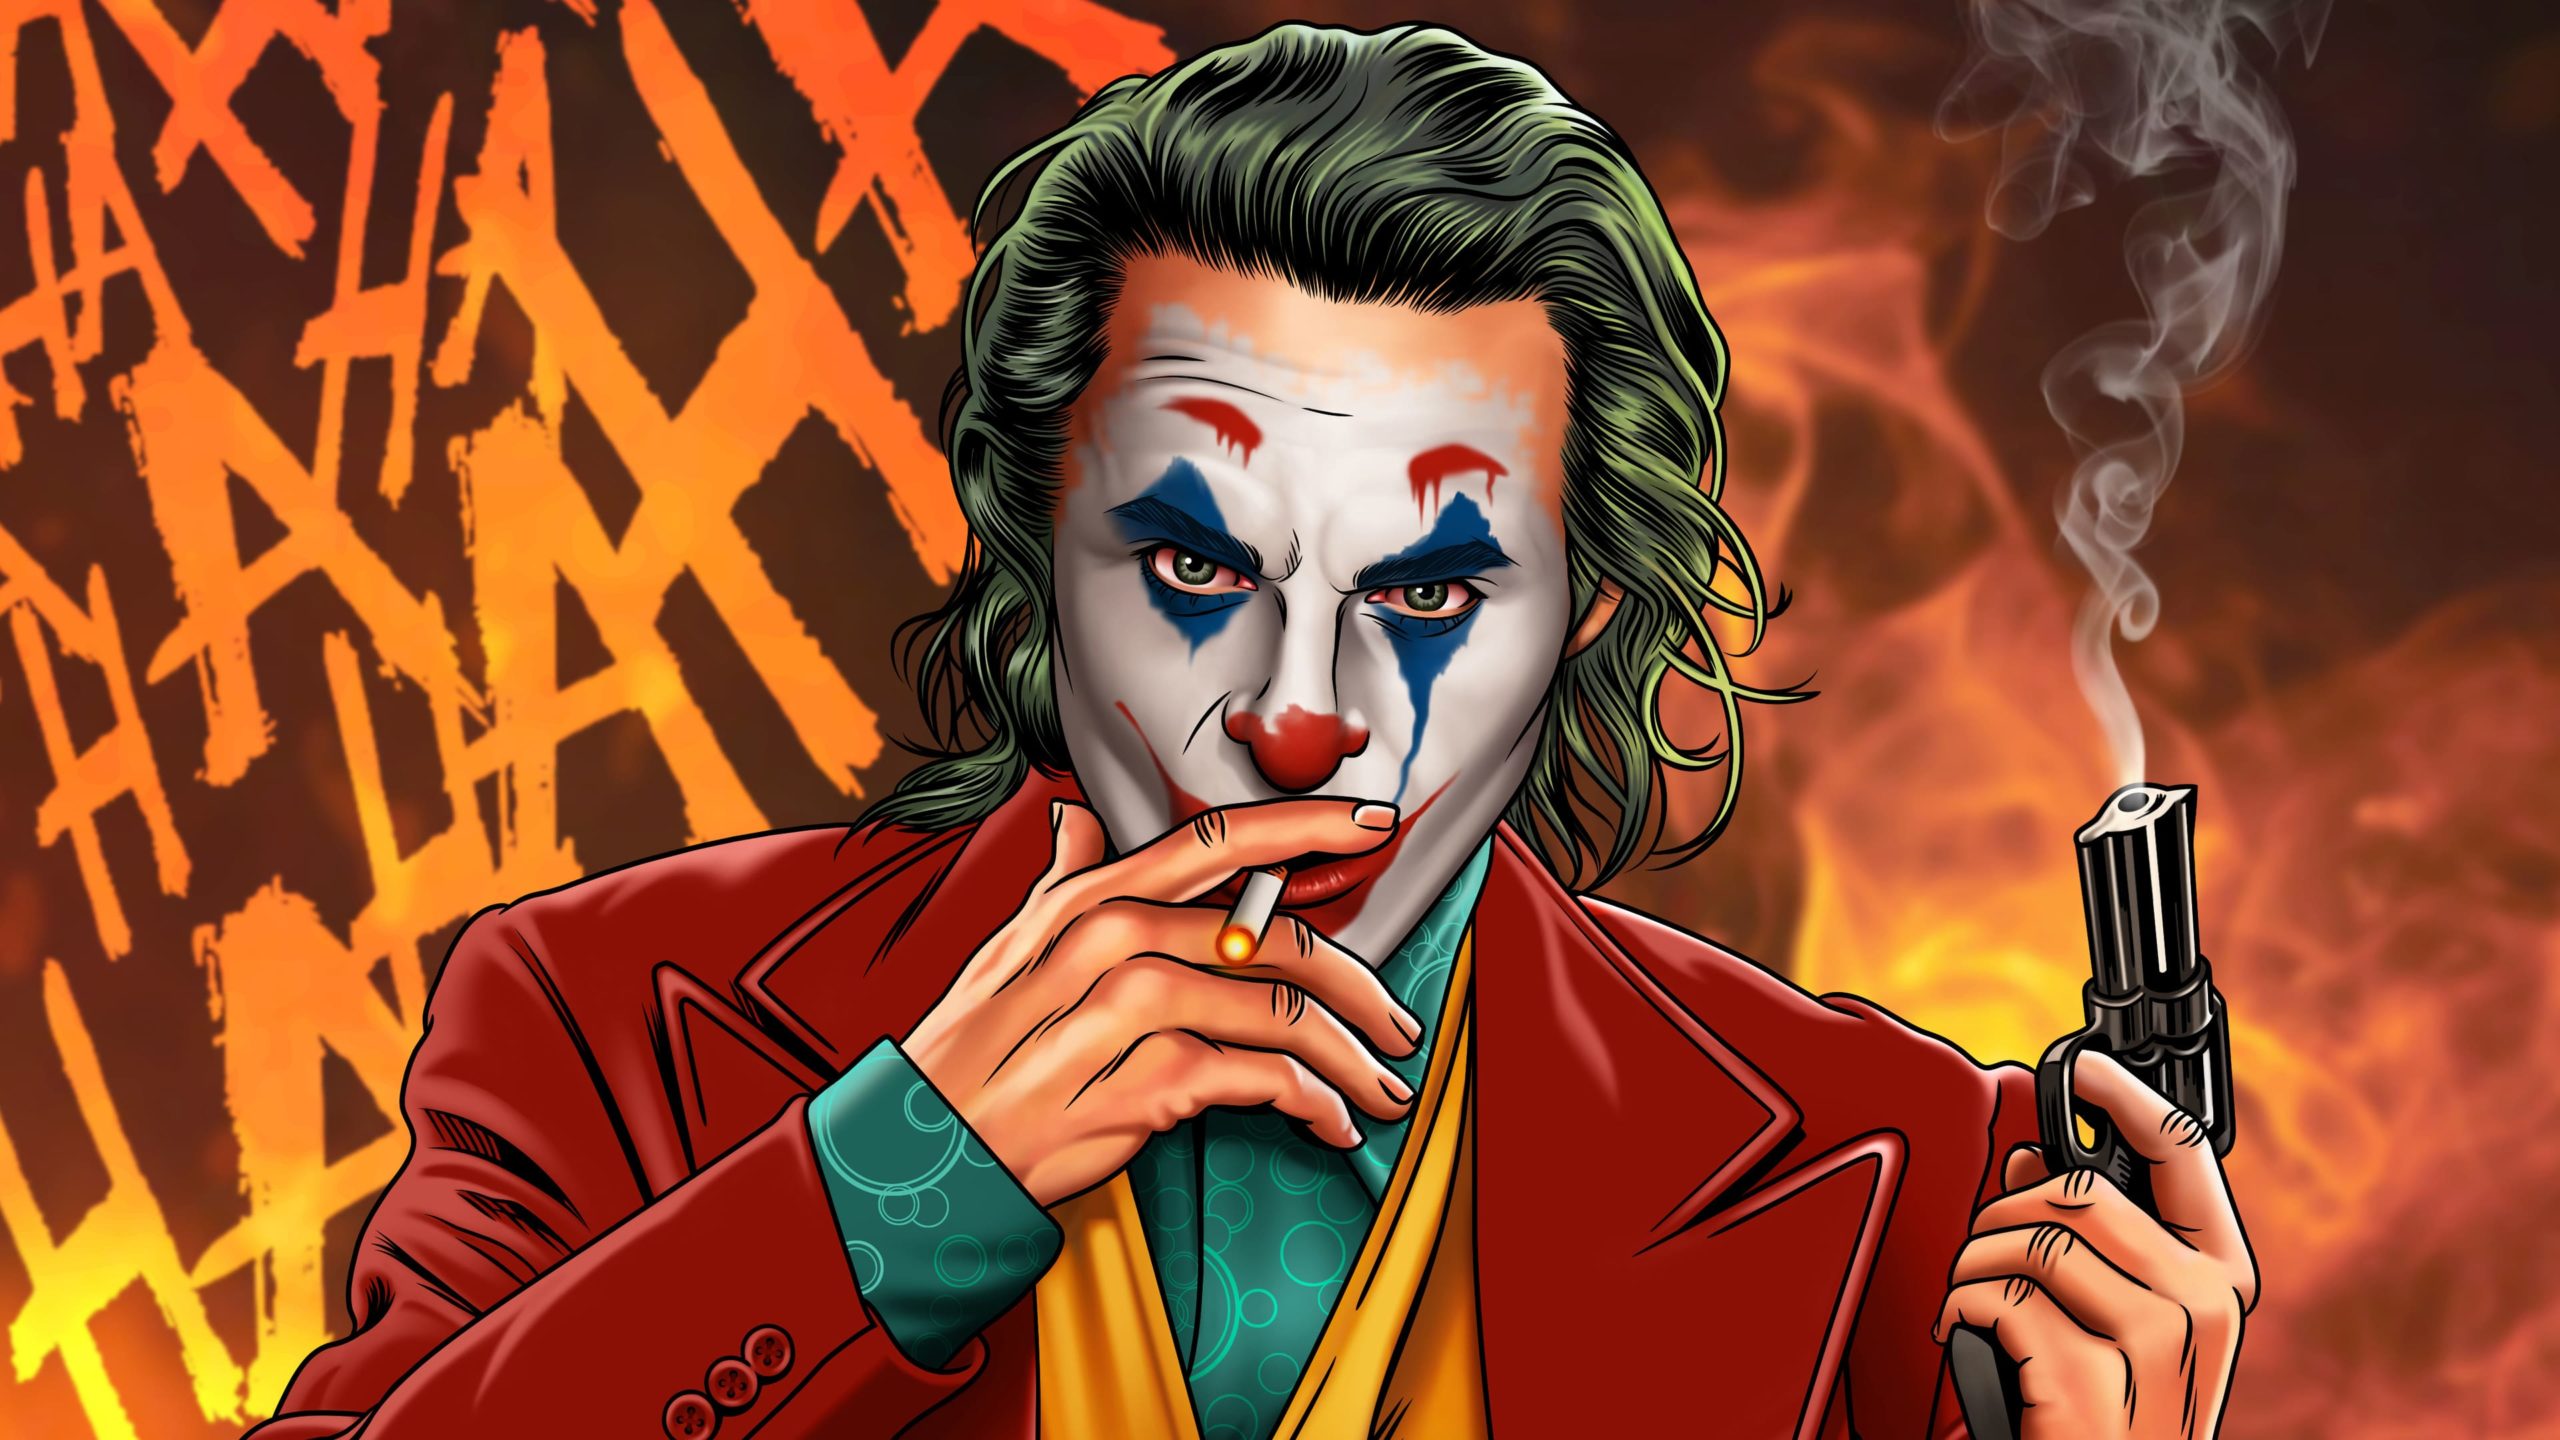 Joker Smoking Wallpapers - Top 35 Joker Cigarette Smoking Backgrounds